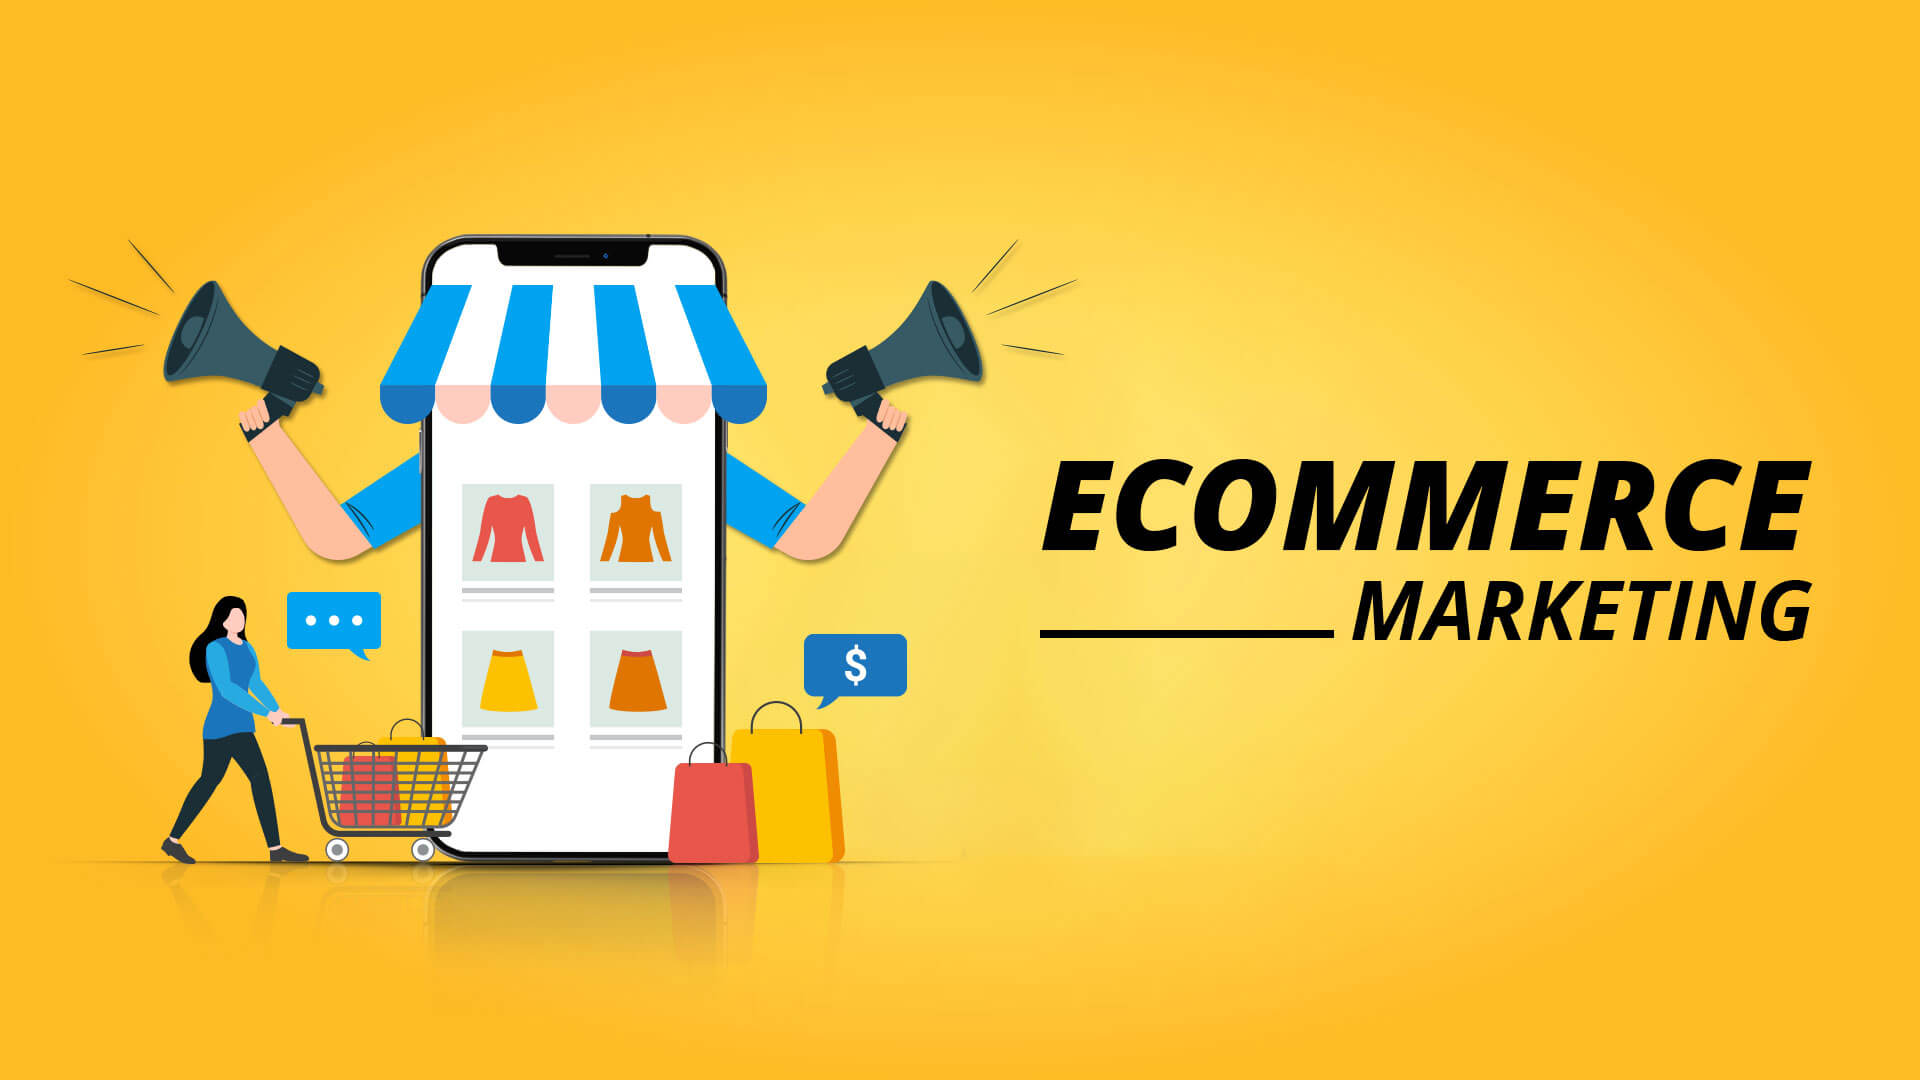 eCommerce marketing and the best eCommerce marketing strategies